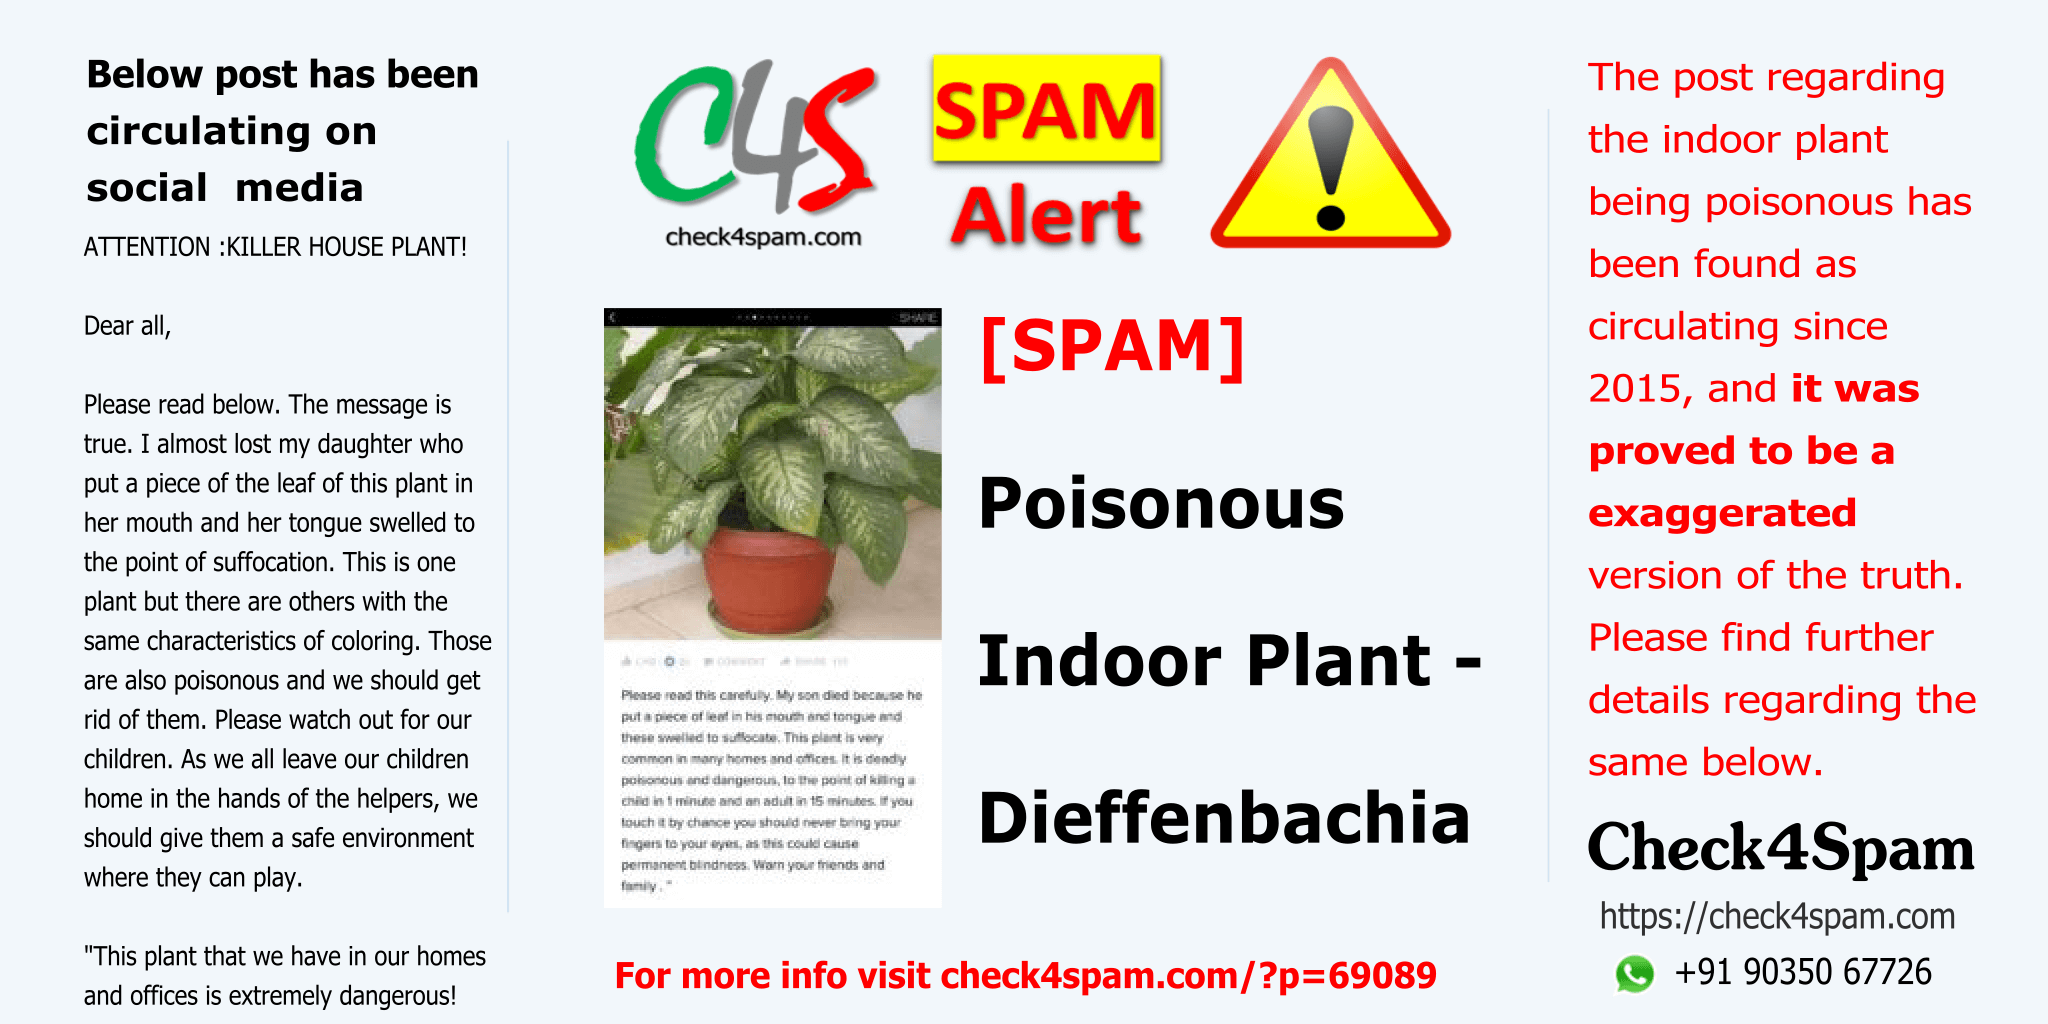 Dieffenbachia Poisonous Plant - SPAM